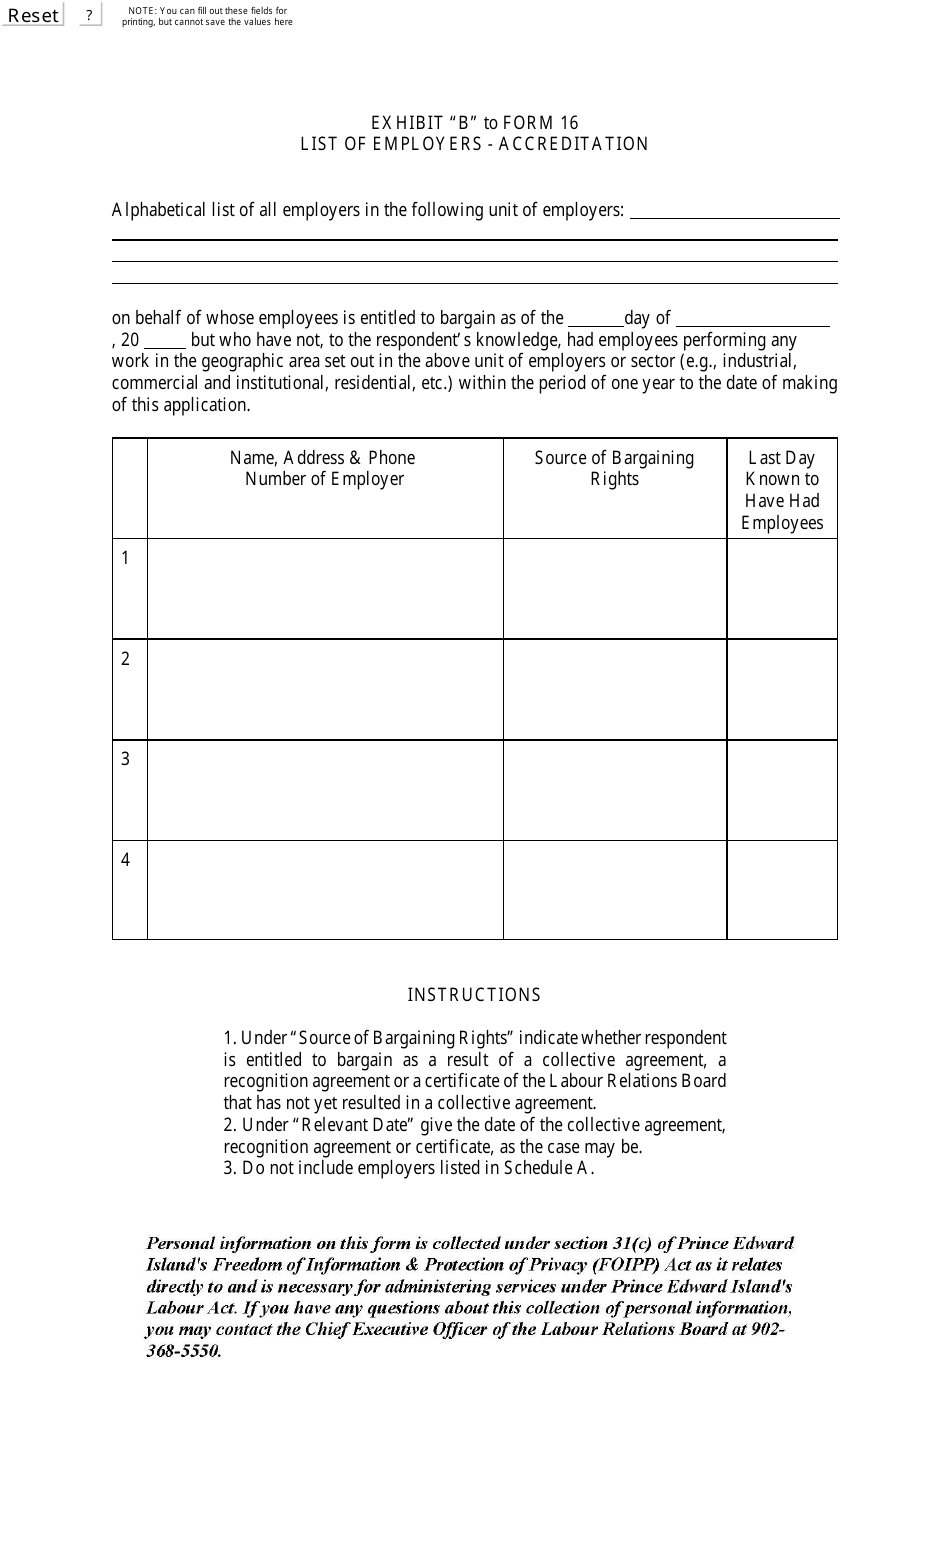 Form 16 Exhibit B List of Employers - Accreditation - Prince Edward Island, Canada, Page 1